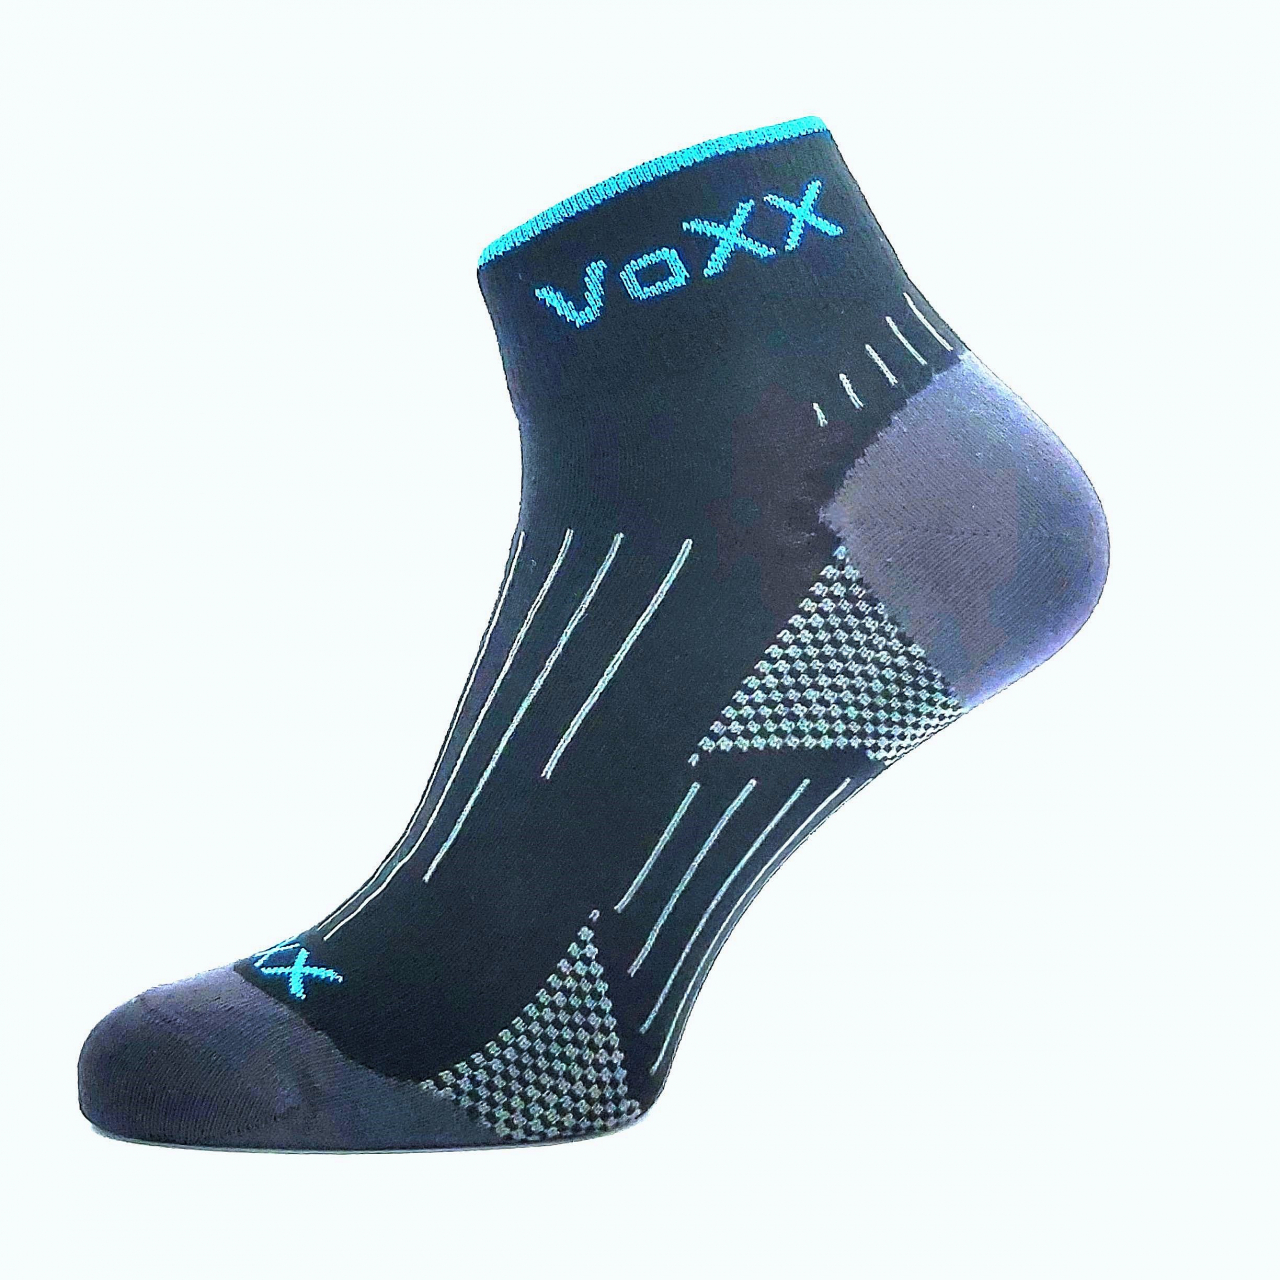 Ponožky tenké unisex Voxx Azul - černé, 43-46